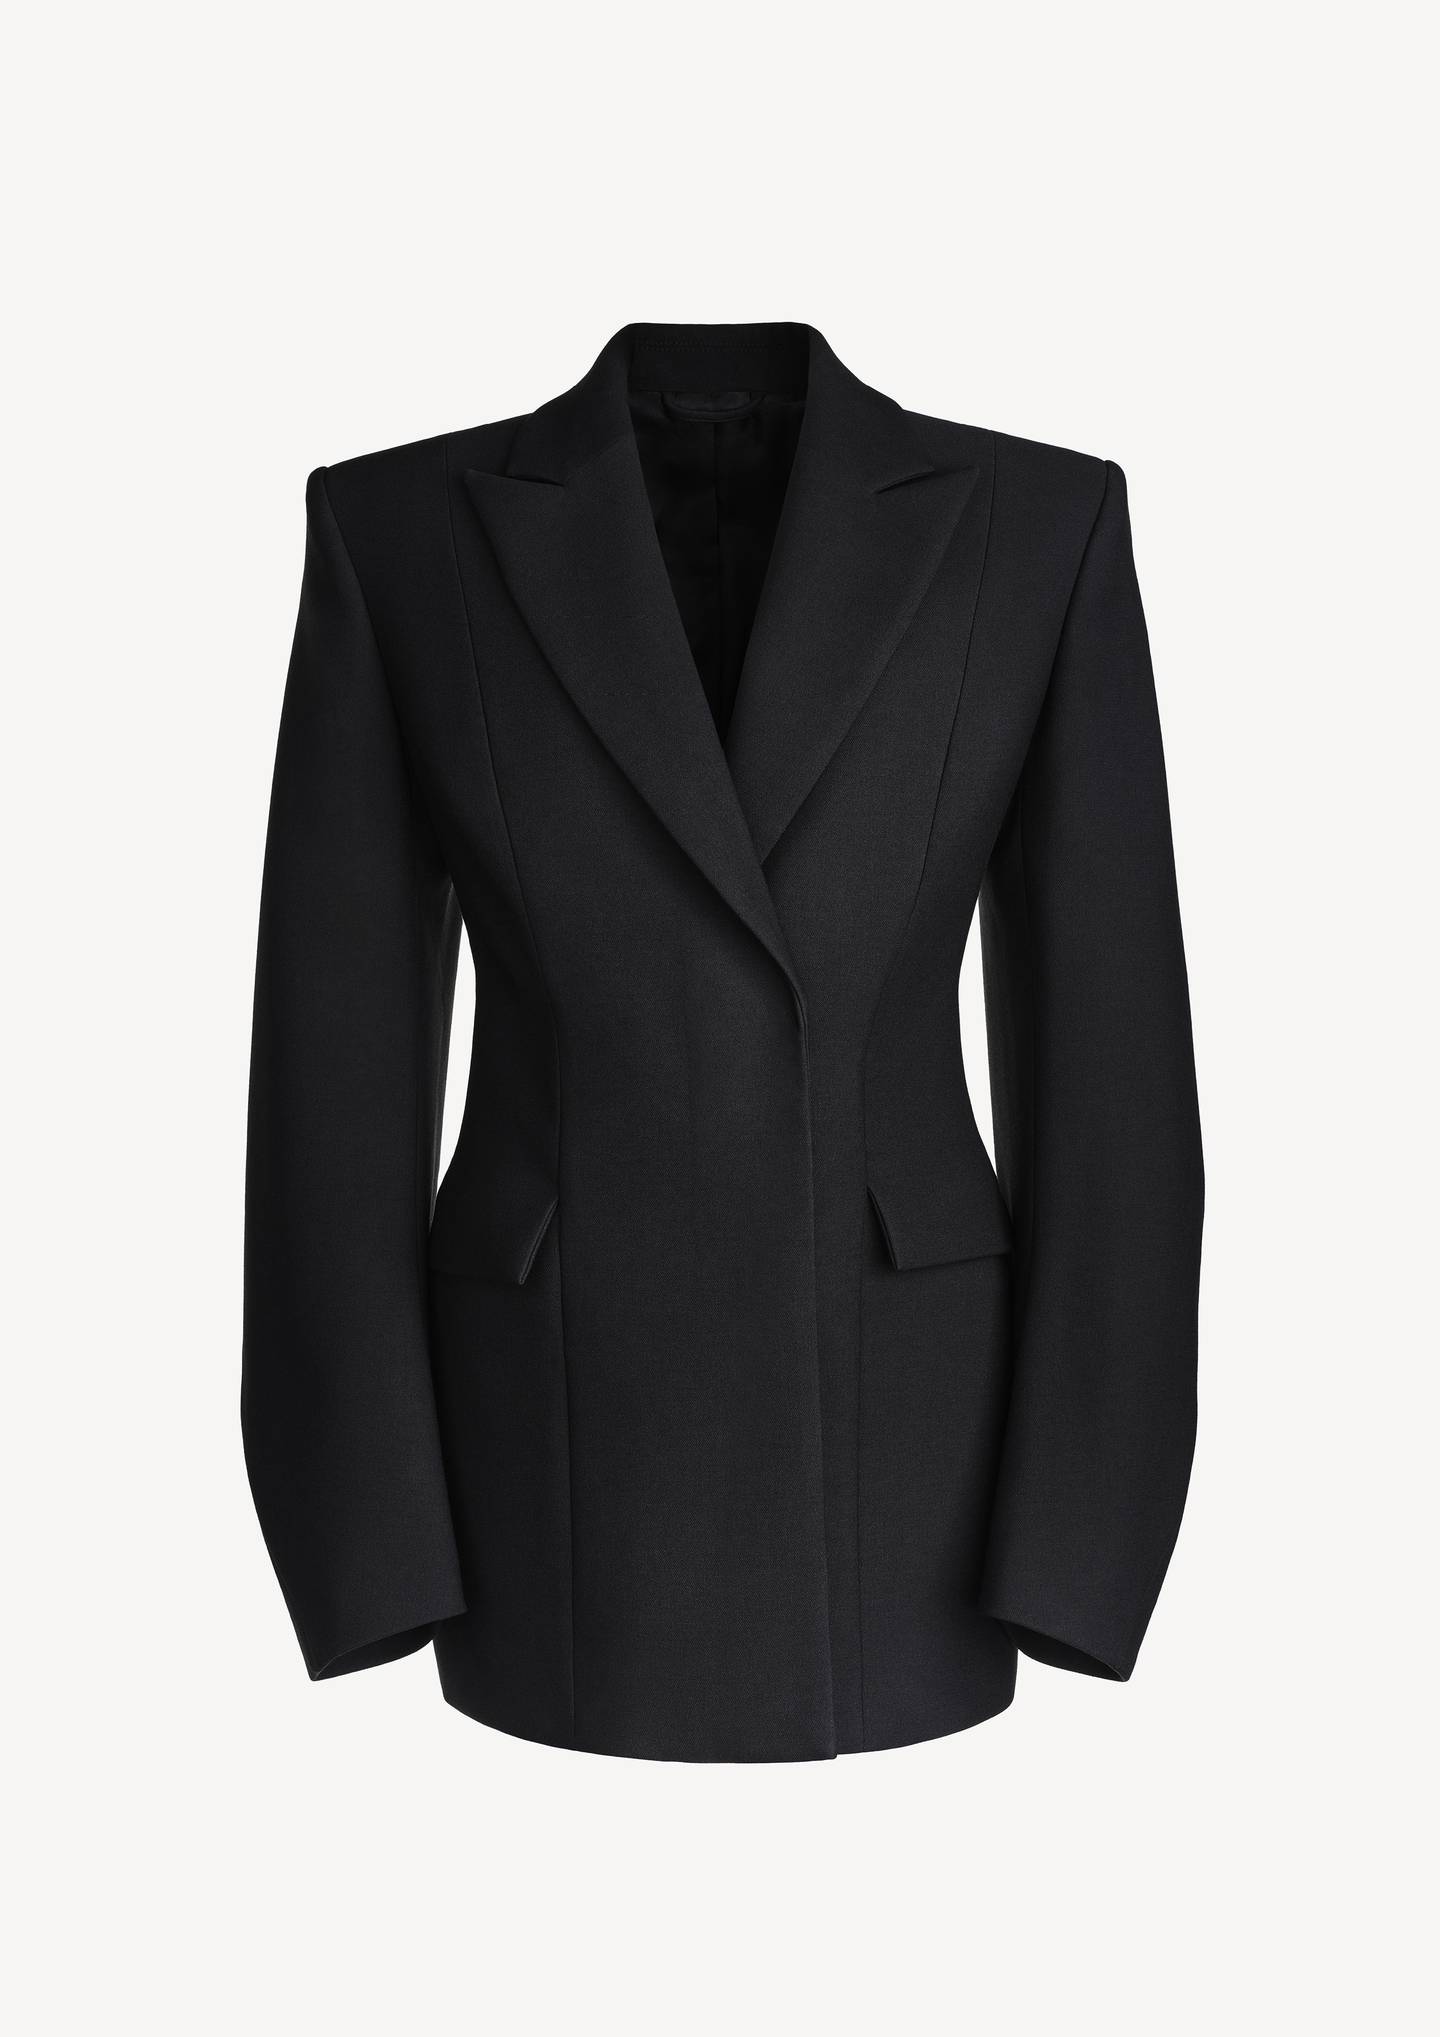 Black blazer, €199, H&M Studio